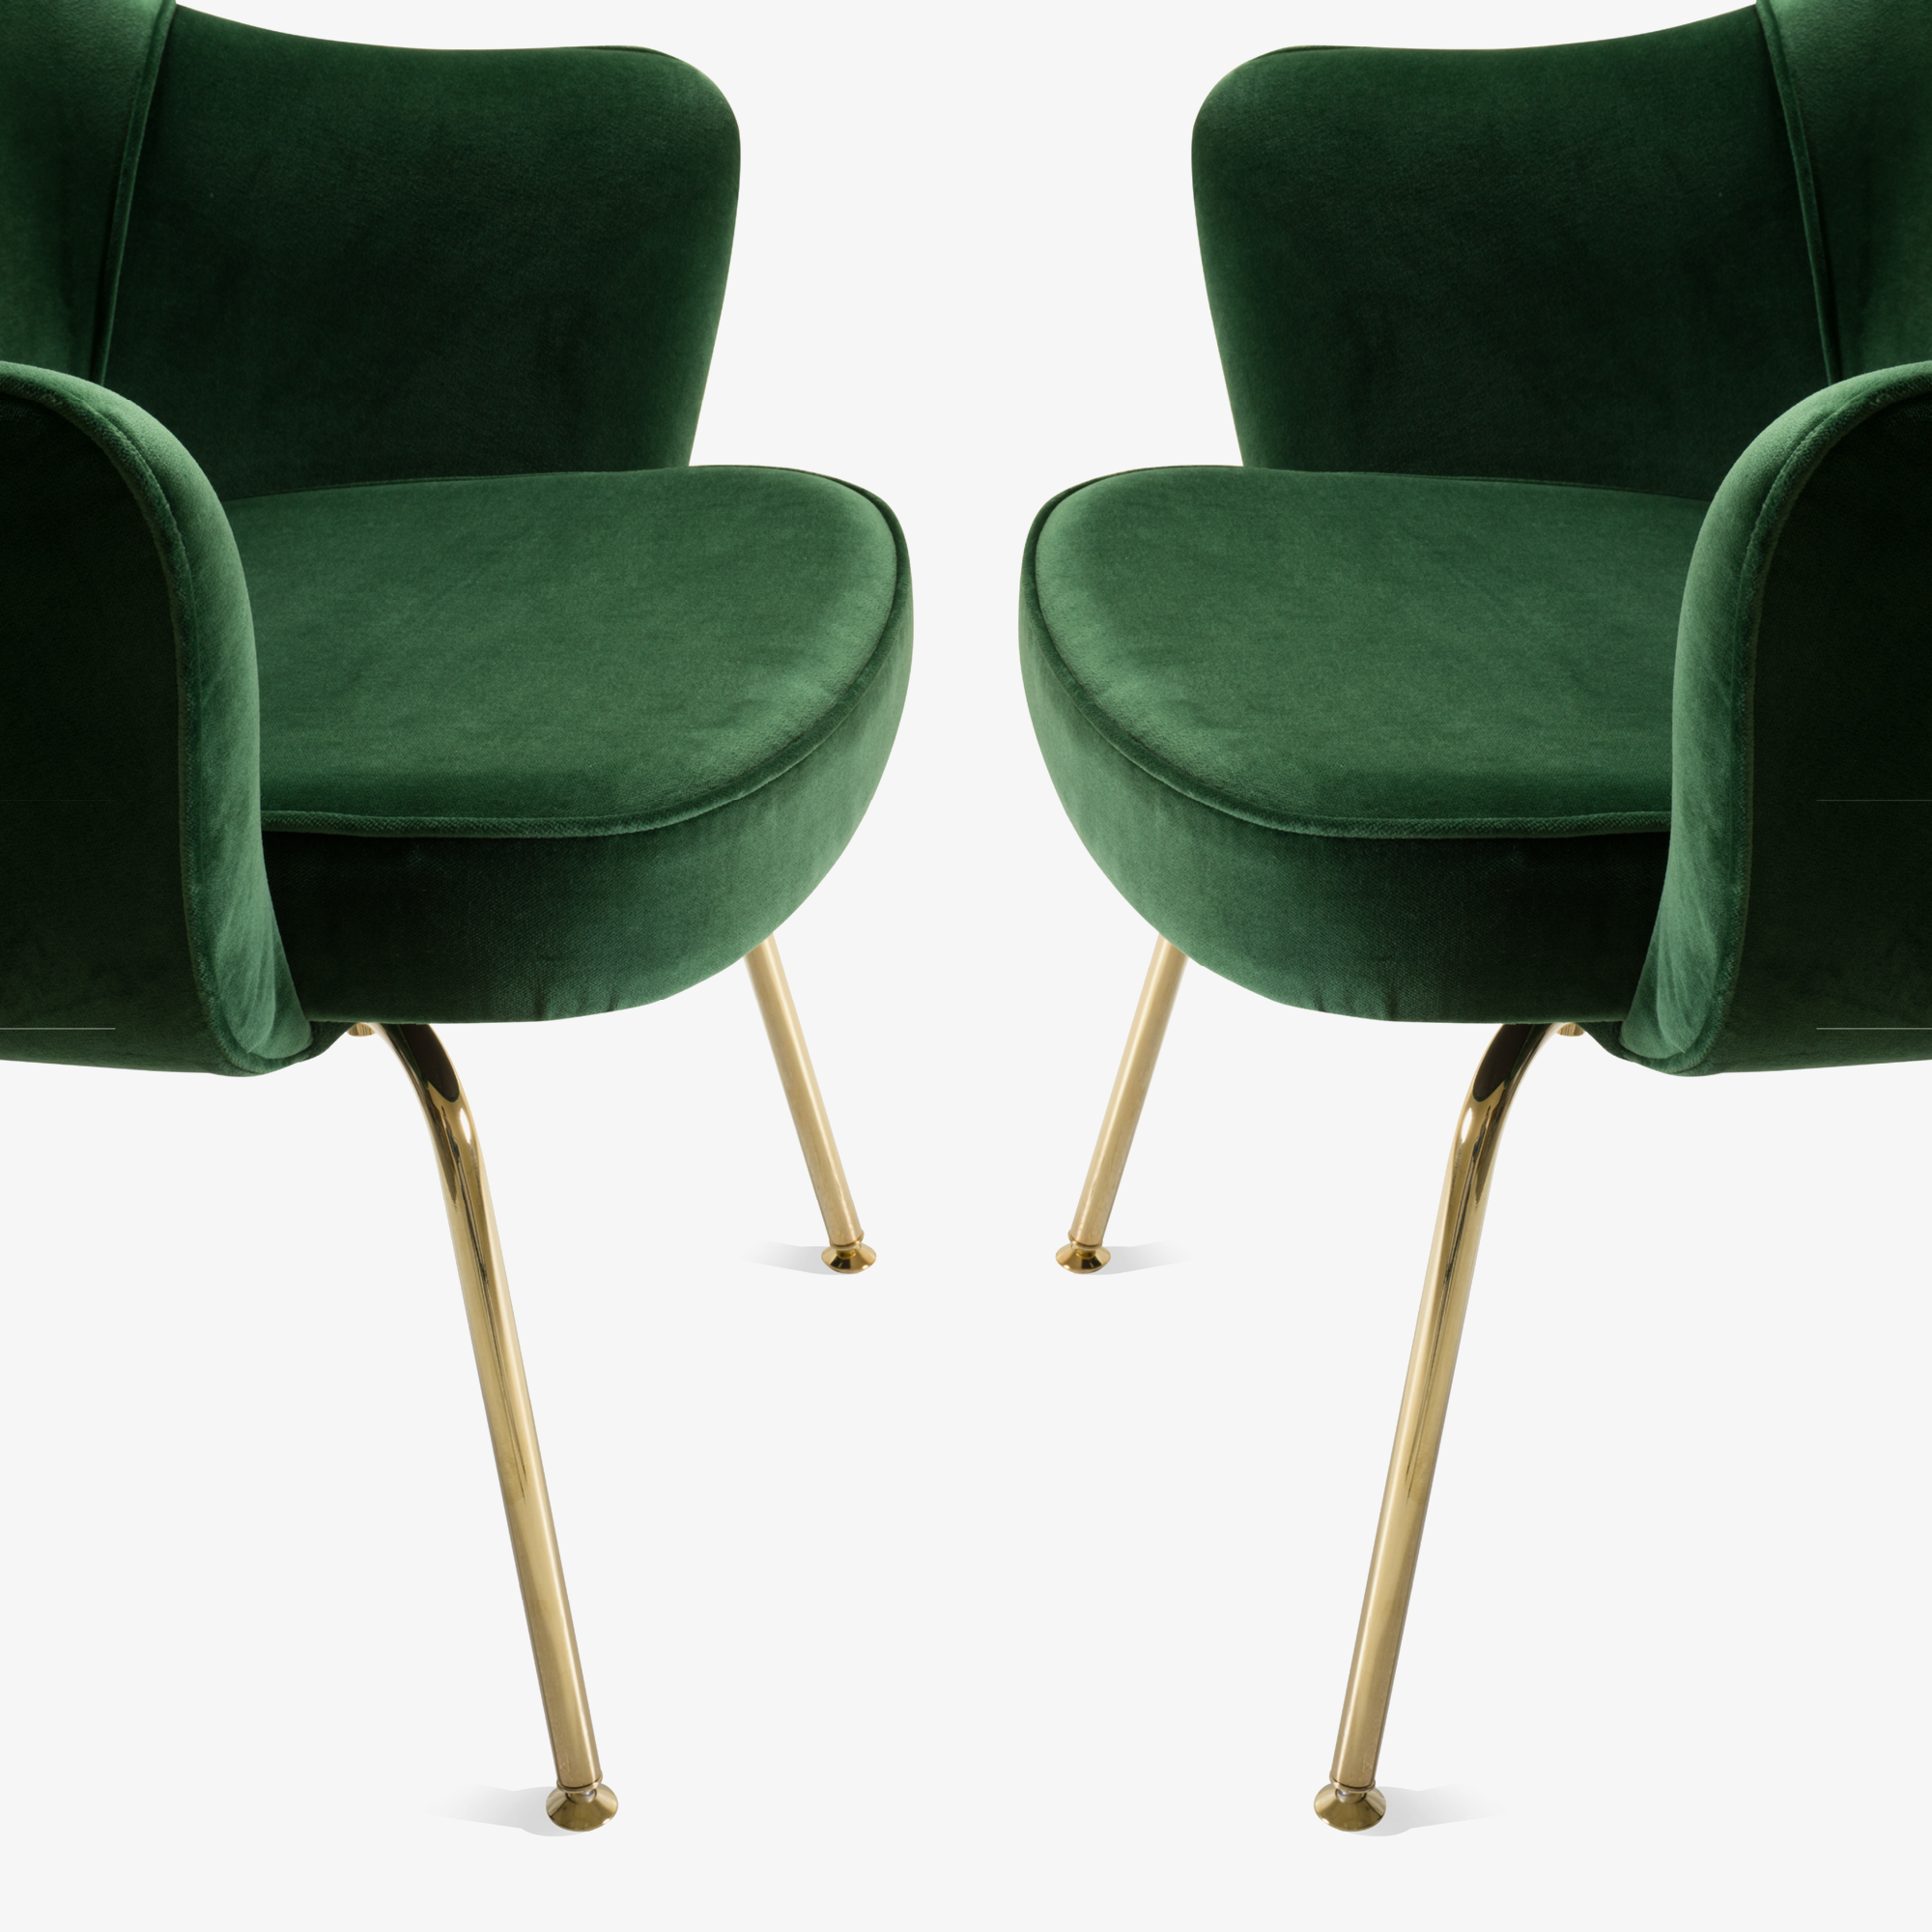 Saarinen Executive Arm Chair in Emerald Velvet, 24k Gold Edition5.png